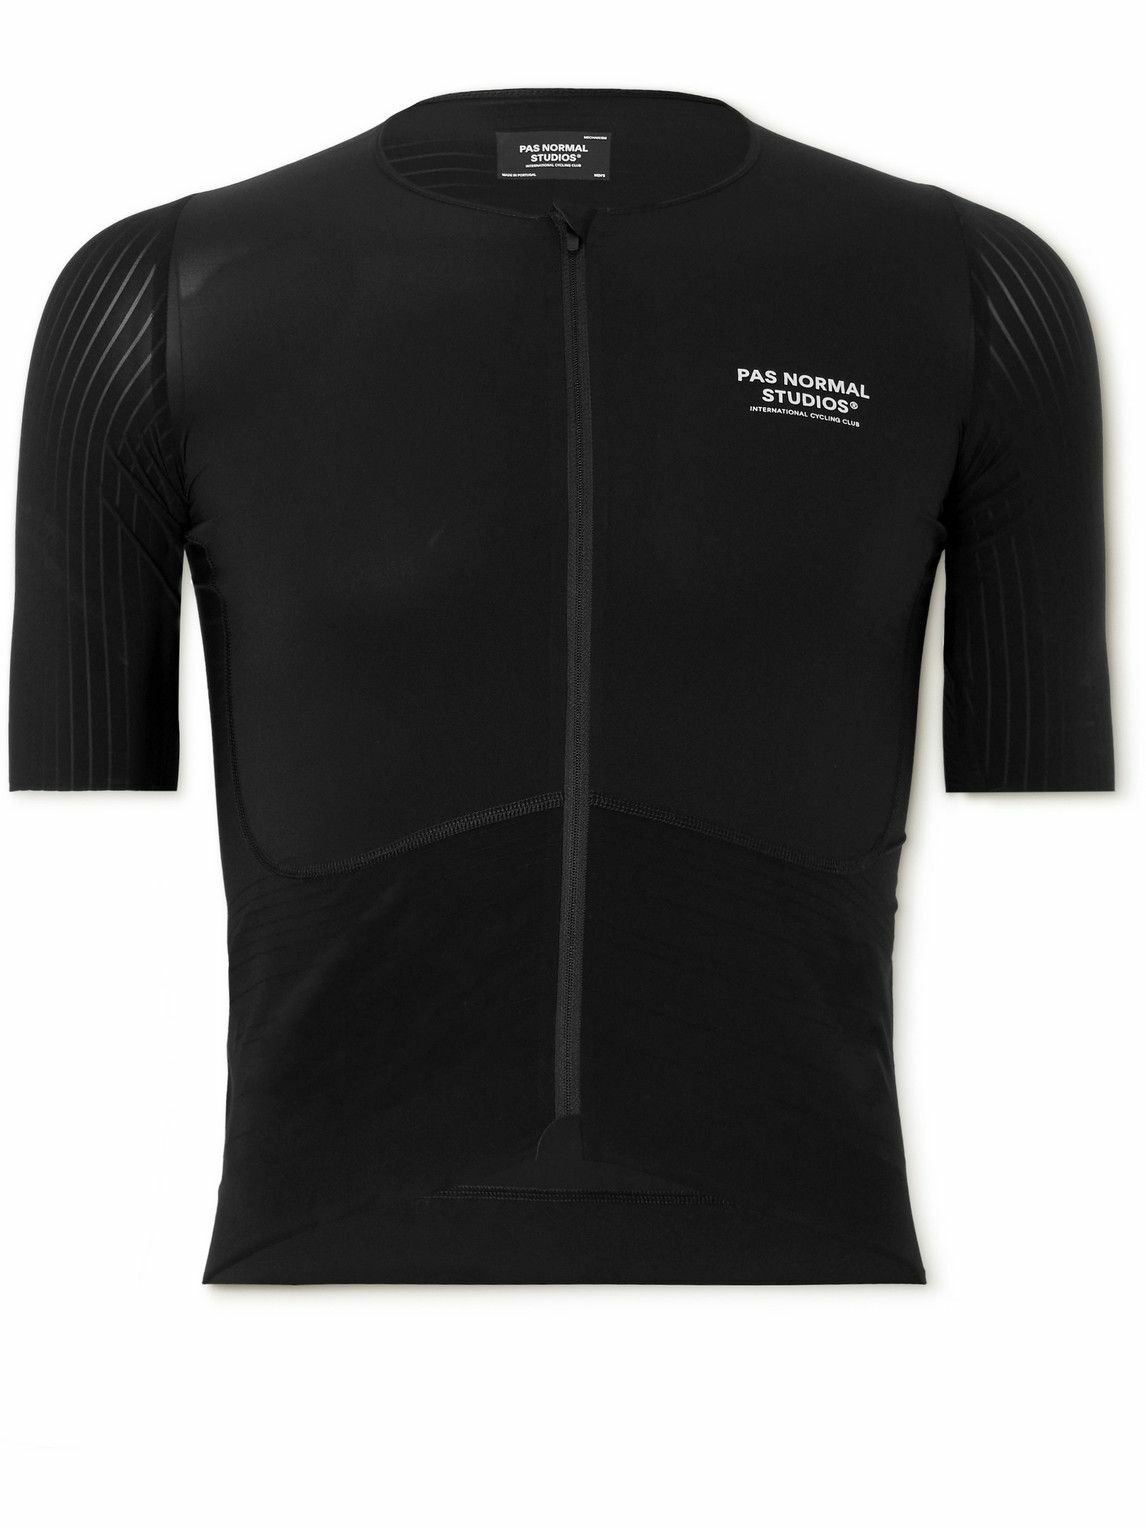 Pas Normal Studios - Mechanism Pro Logo-Print Cycling Jersey - Black ...